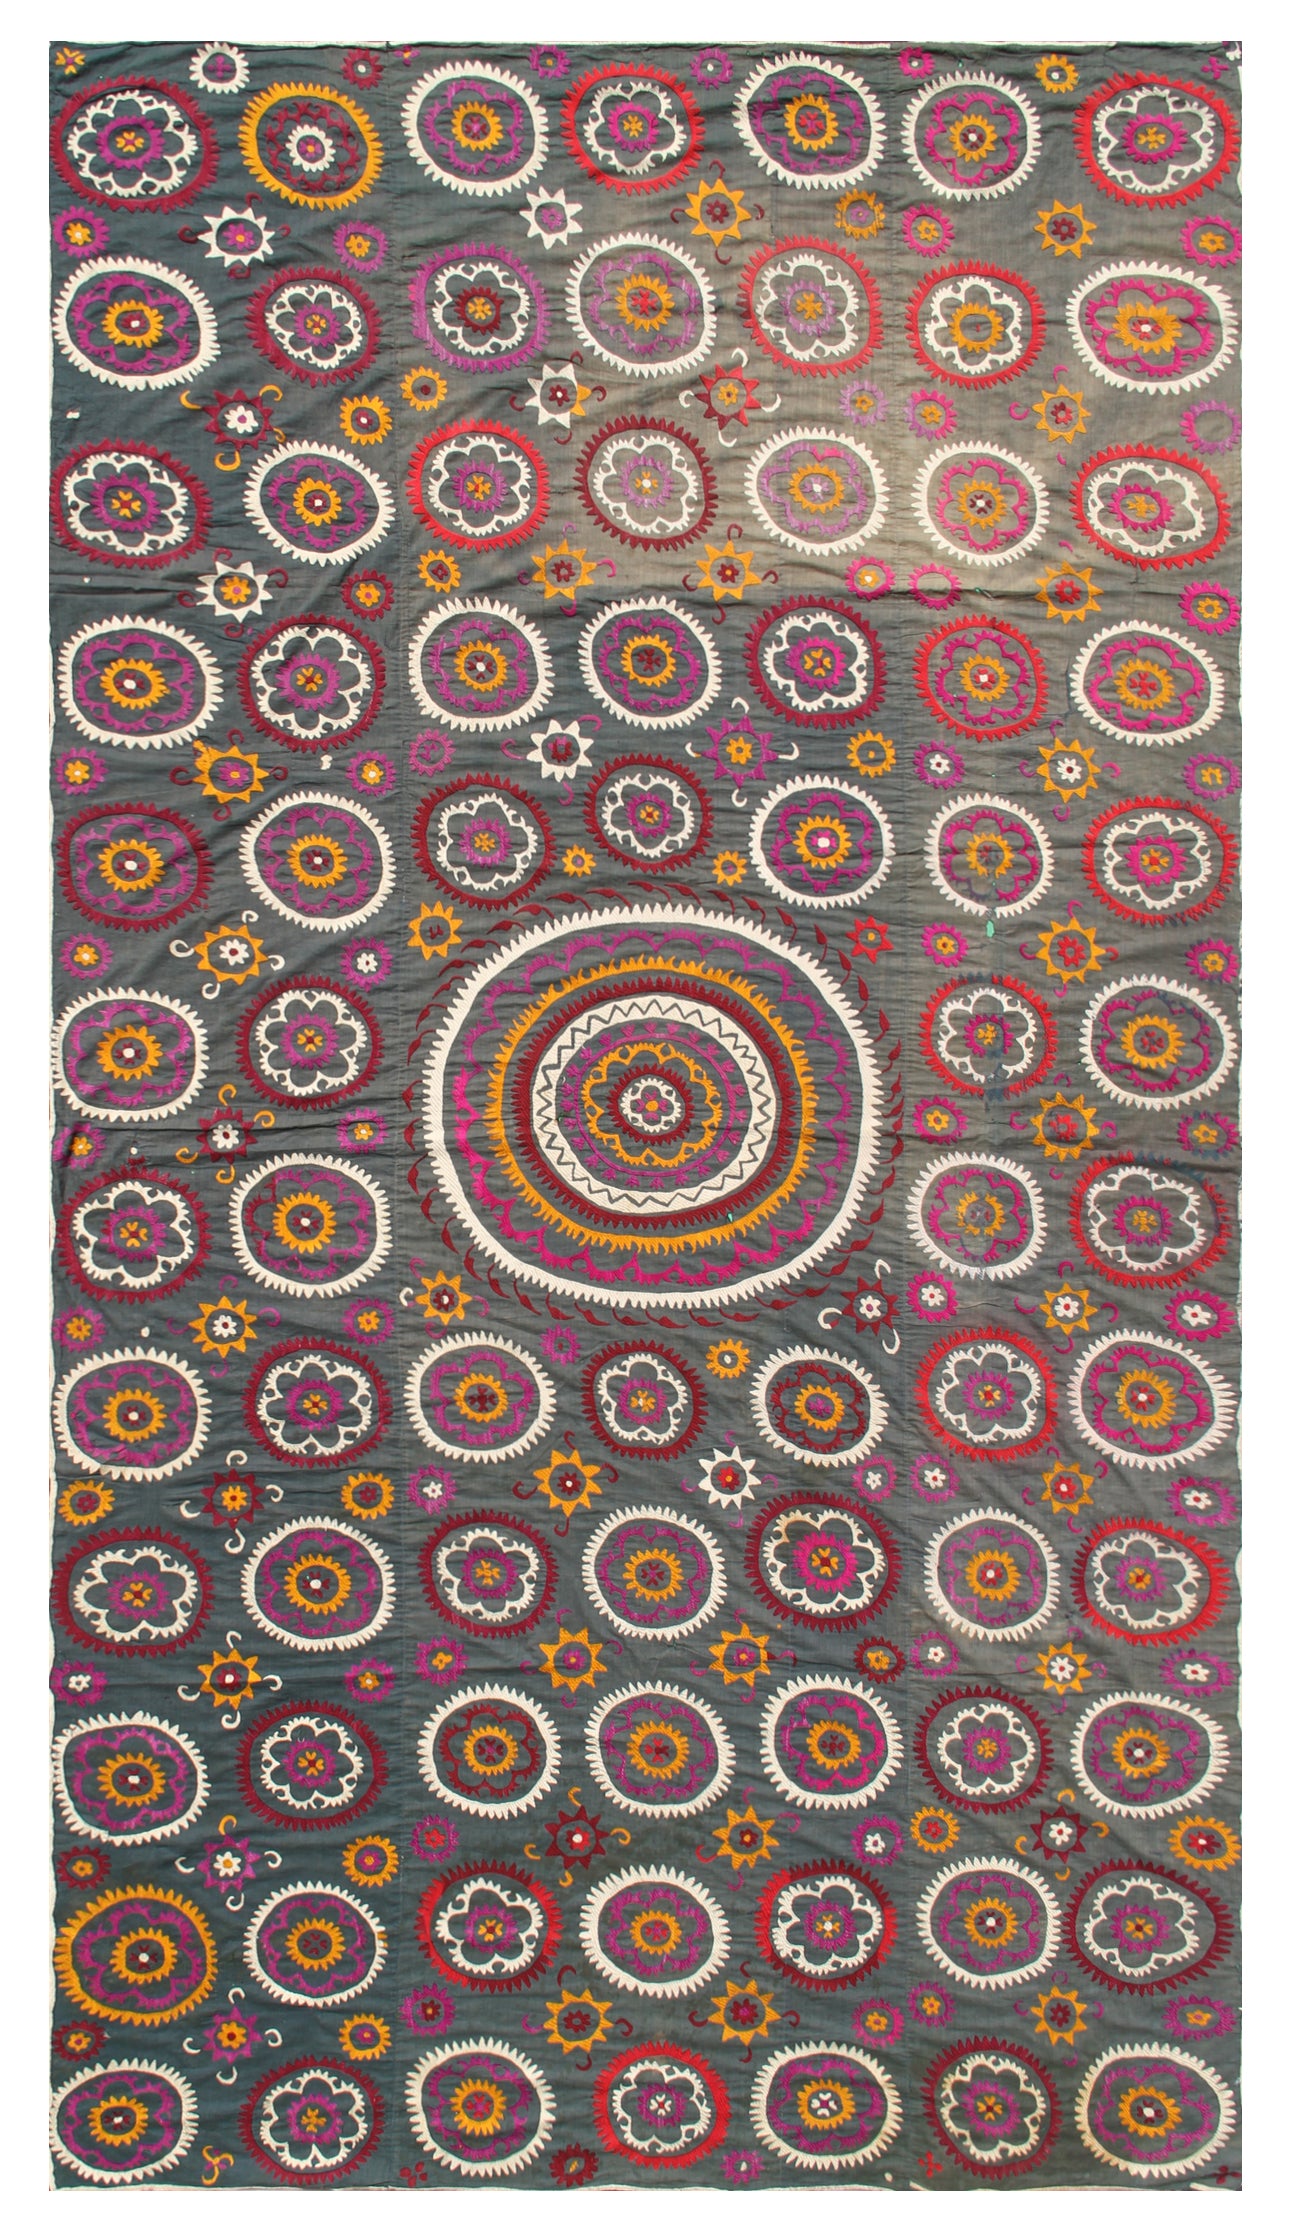 6'x12' Large Fine Quality Uzbek Embroidery Textile